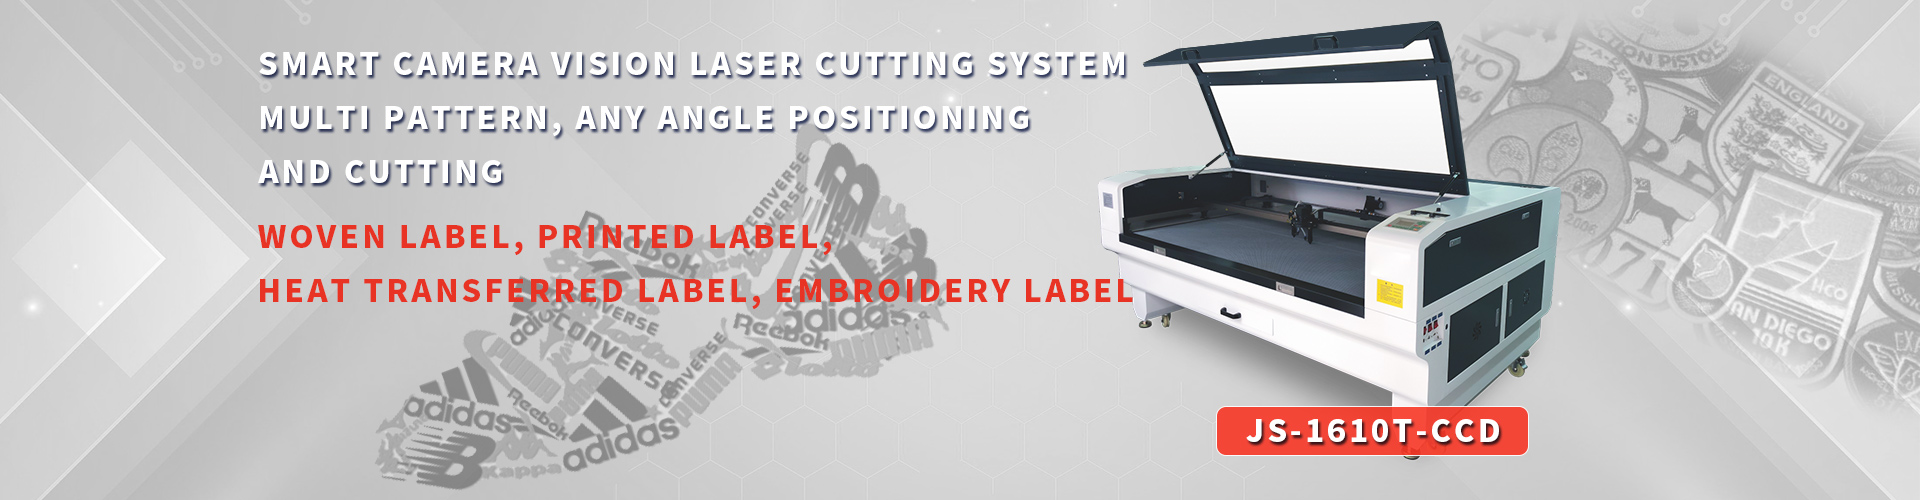 smart camera vision laser cutting system